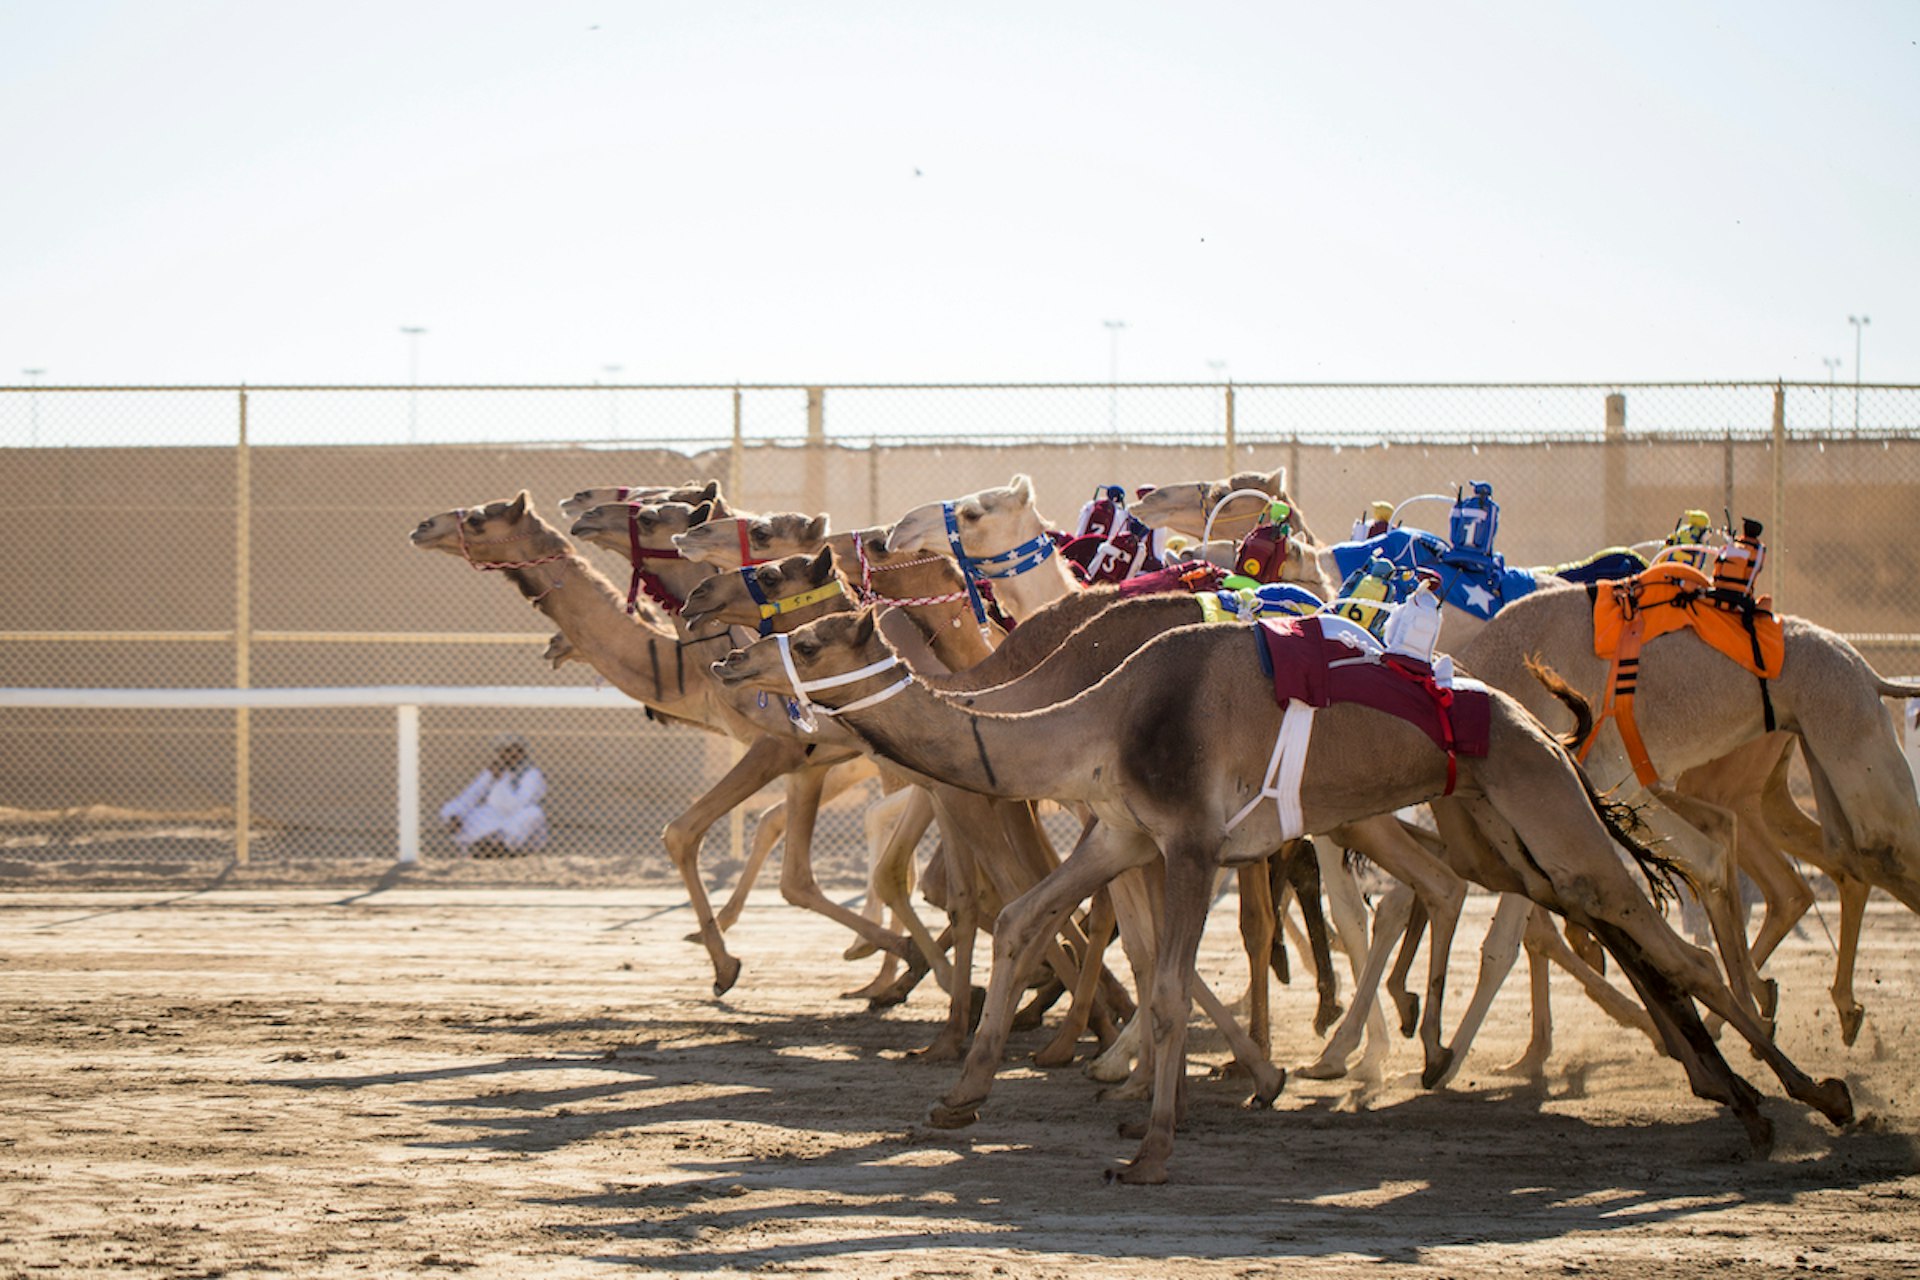 Camels race in Qatar desert